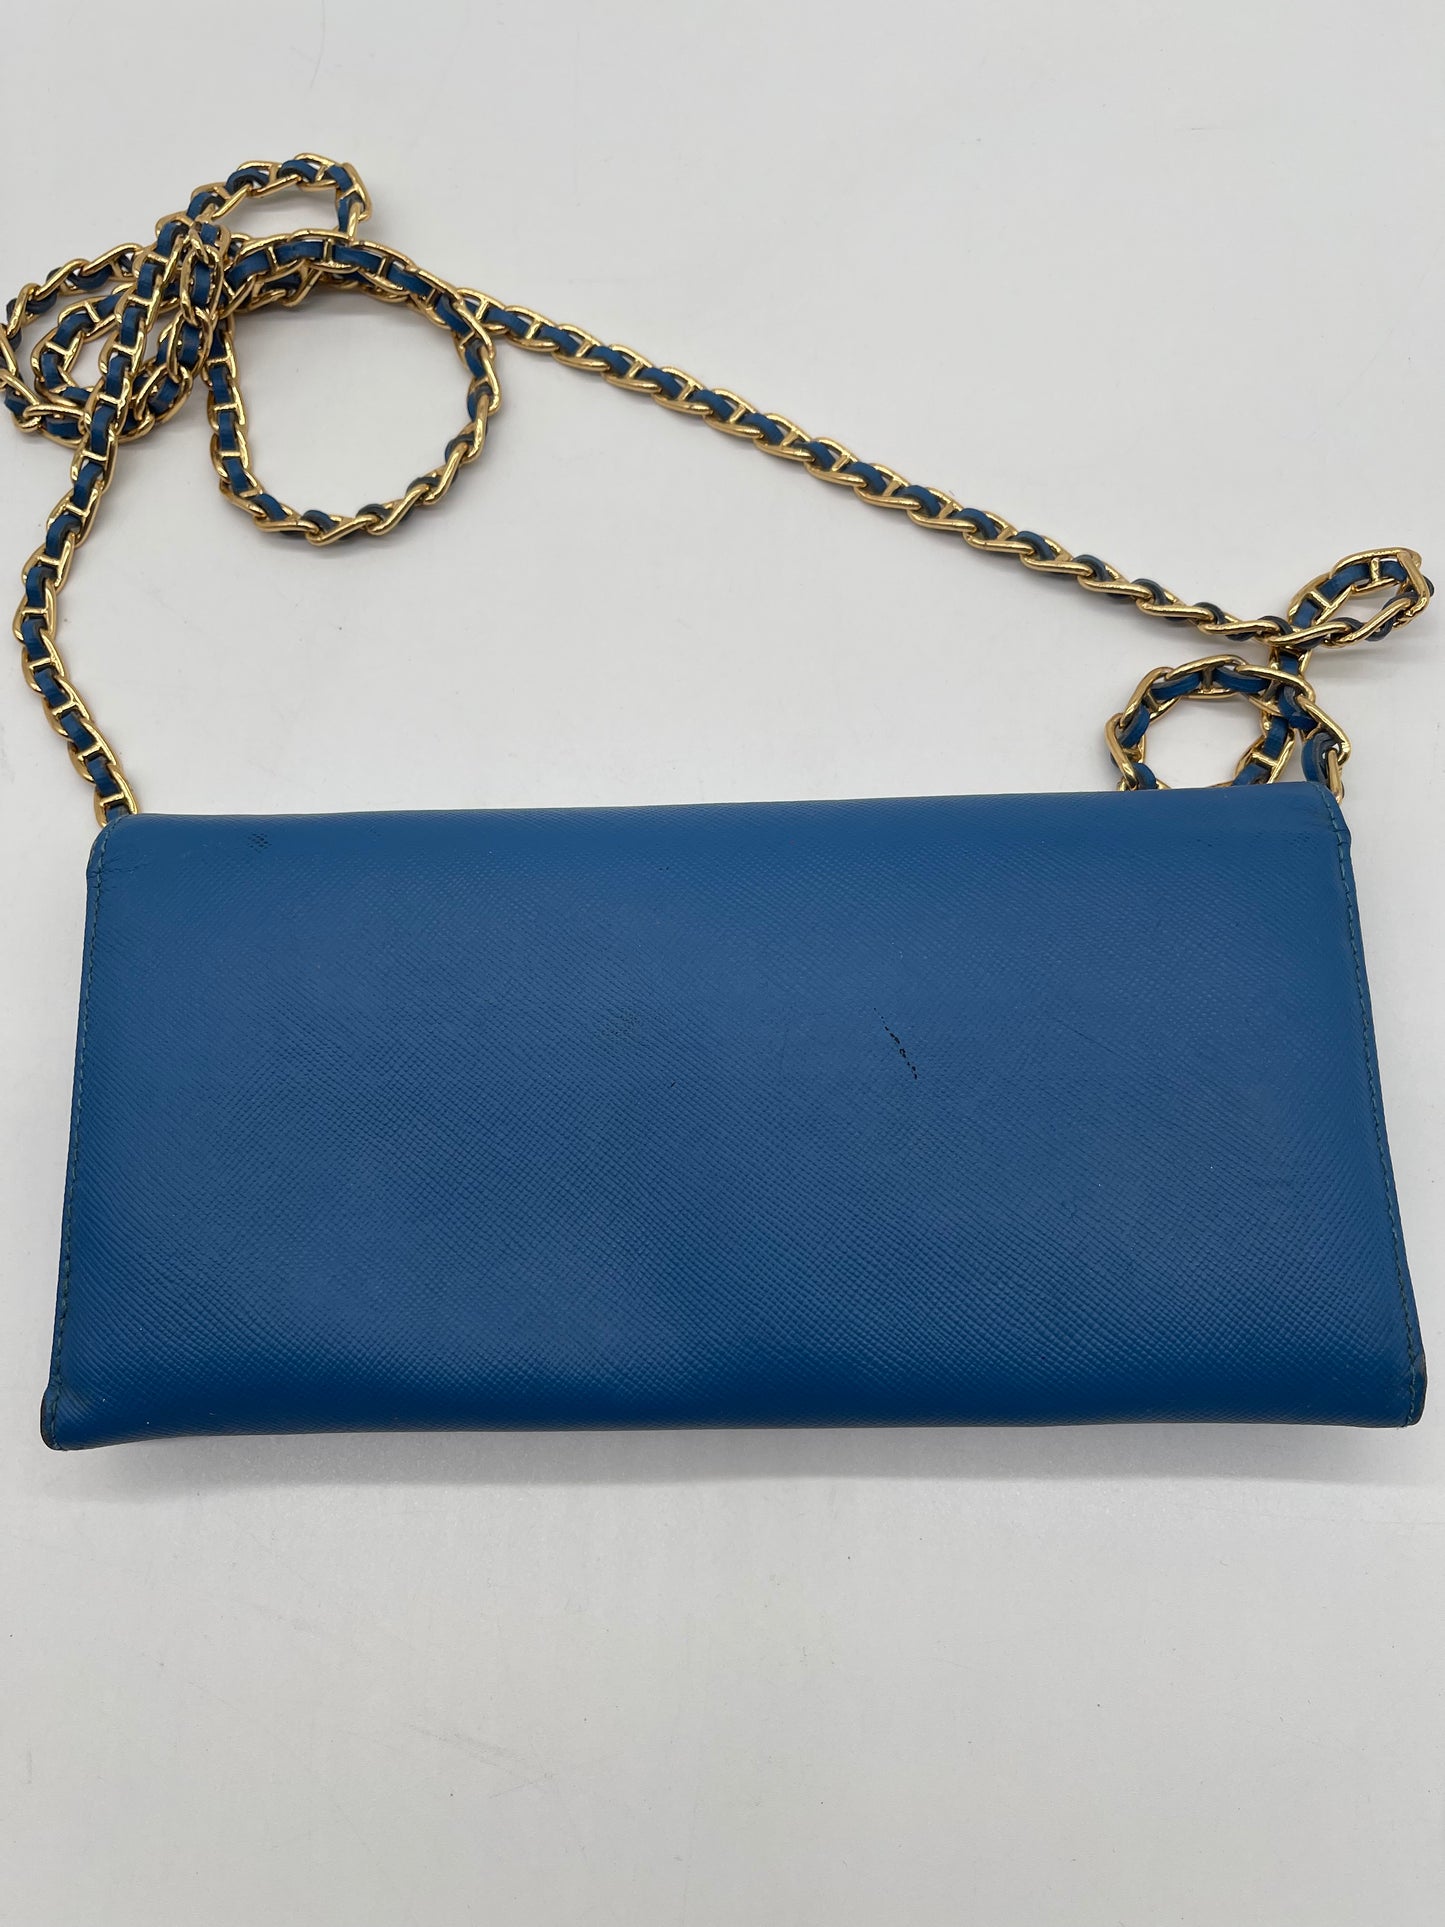 Prada mini saffiano leather crossbody bag